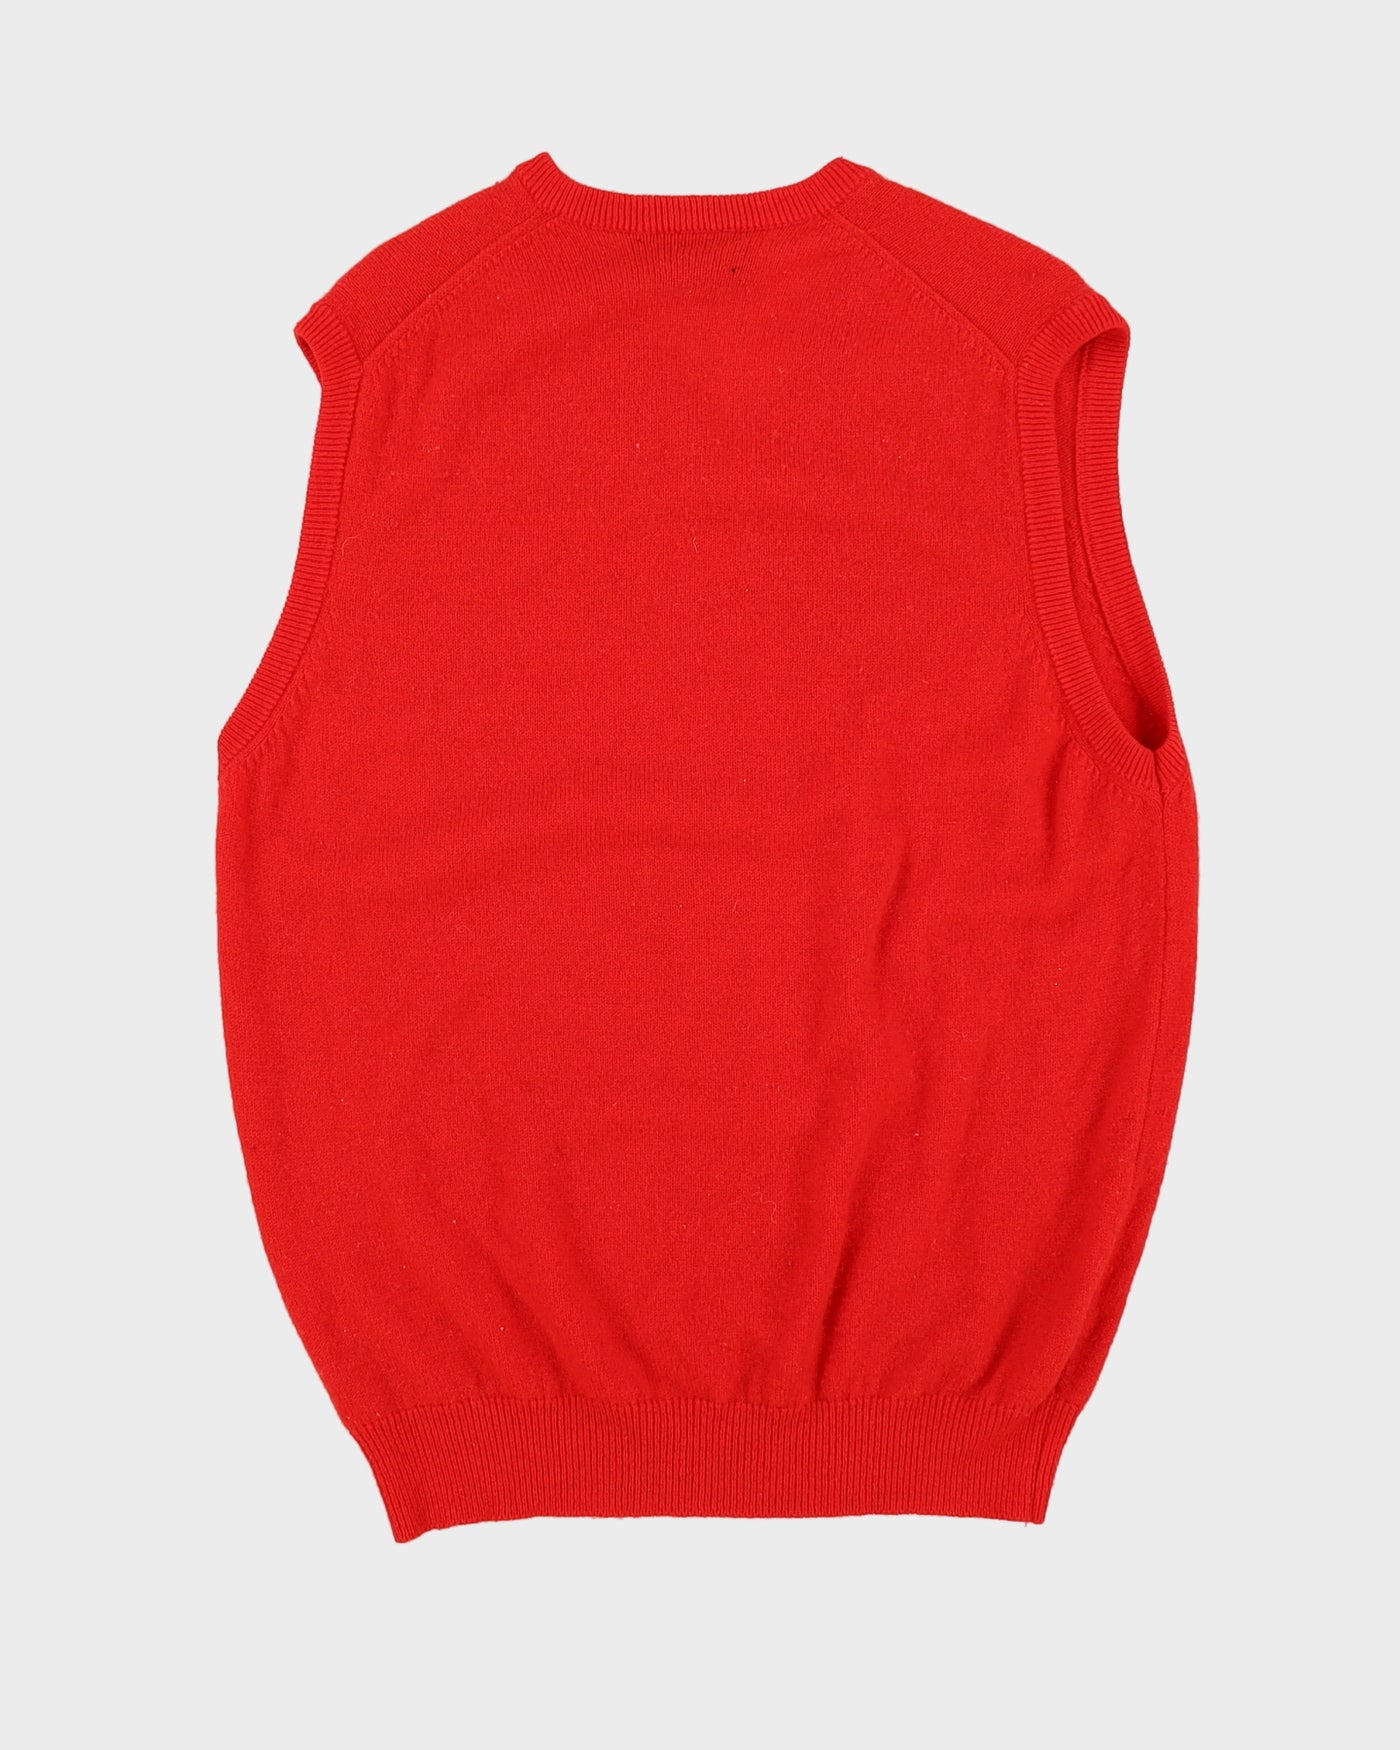 Vintage 80s Red Sleeveless Sweater Vest Knit - L